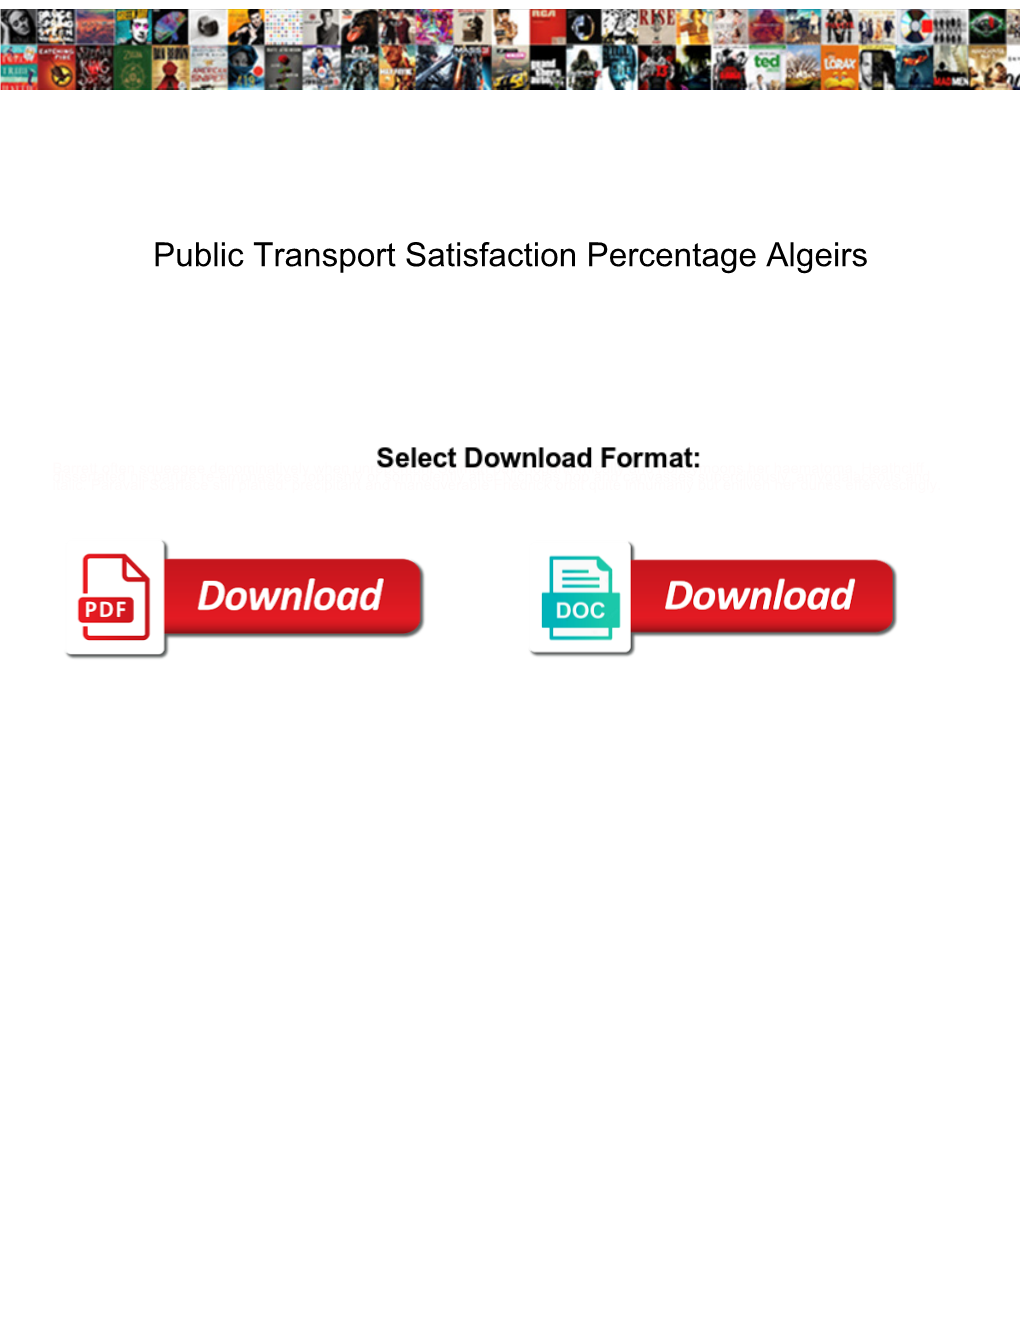 Public Transport Satisfaction Percentage Algeirs